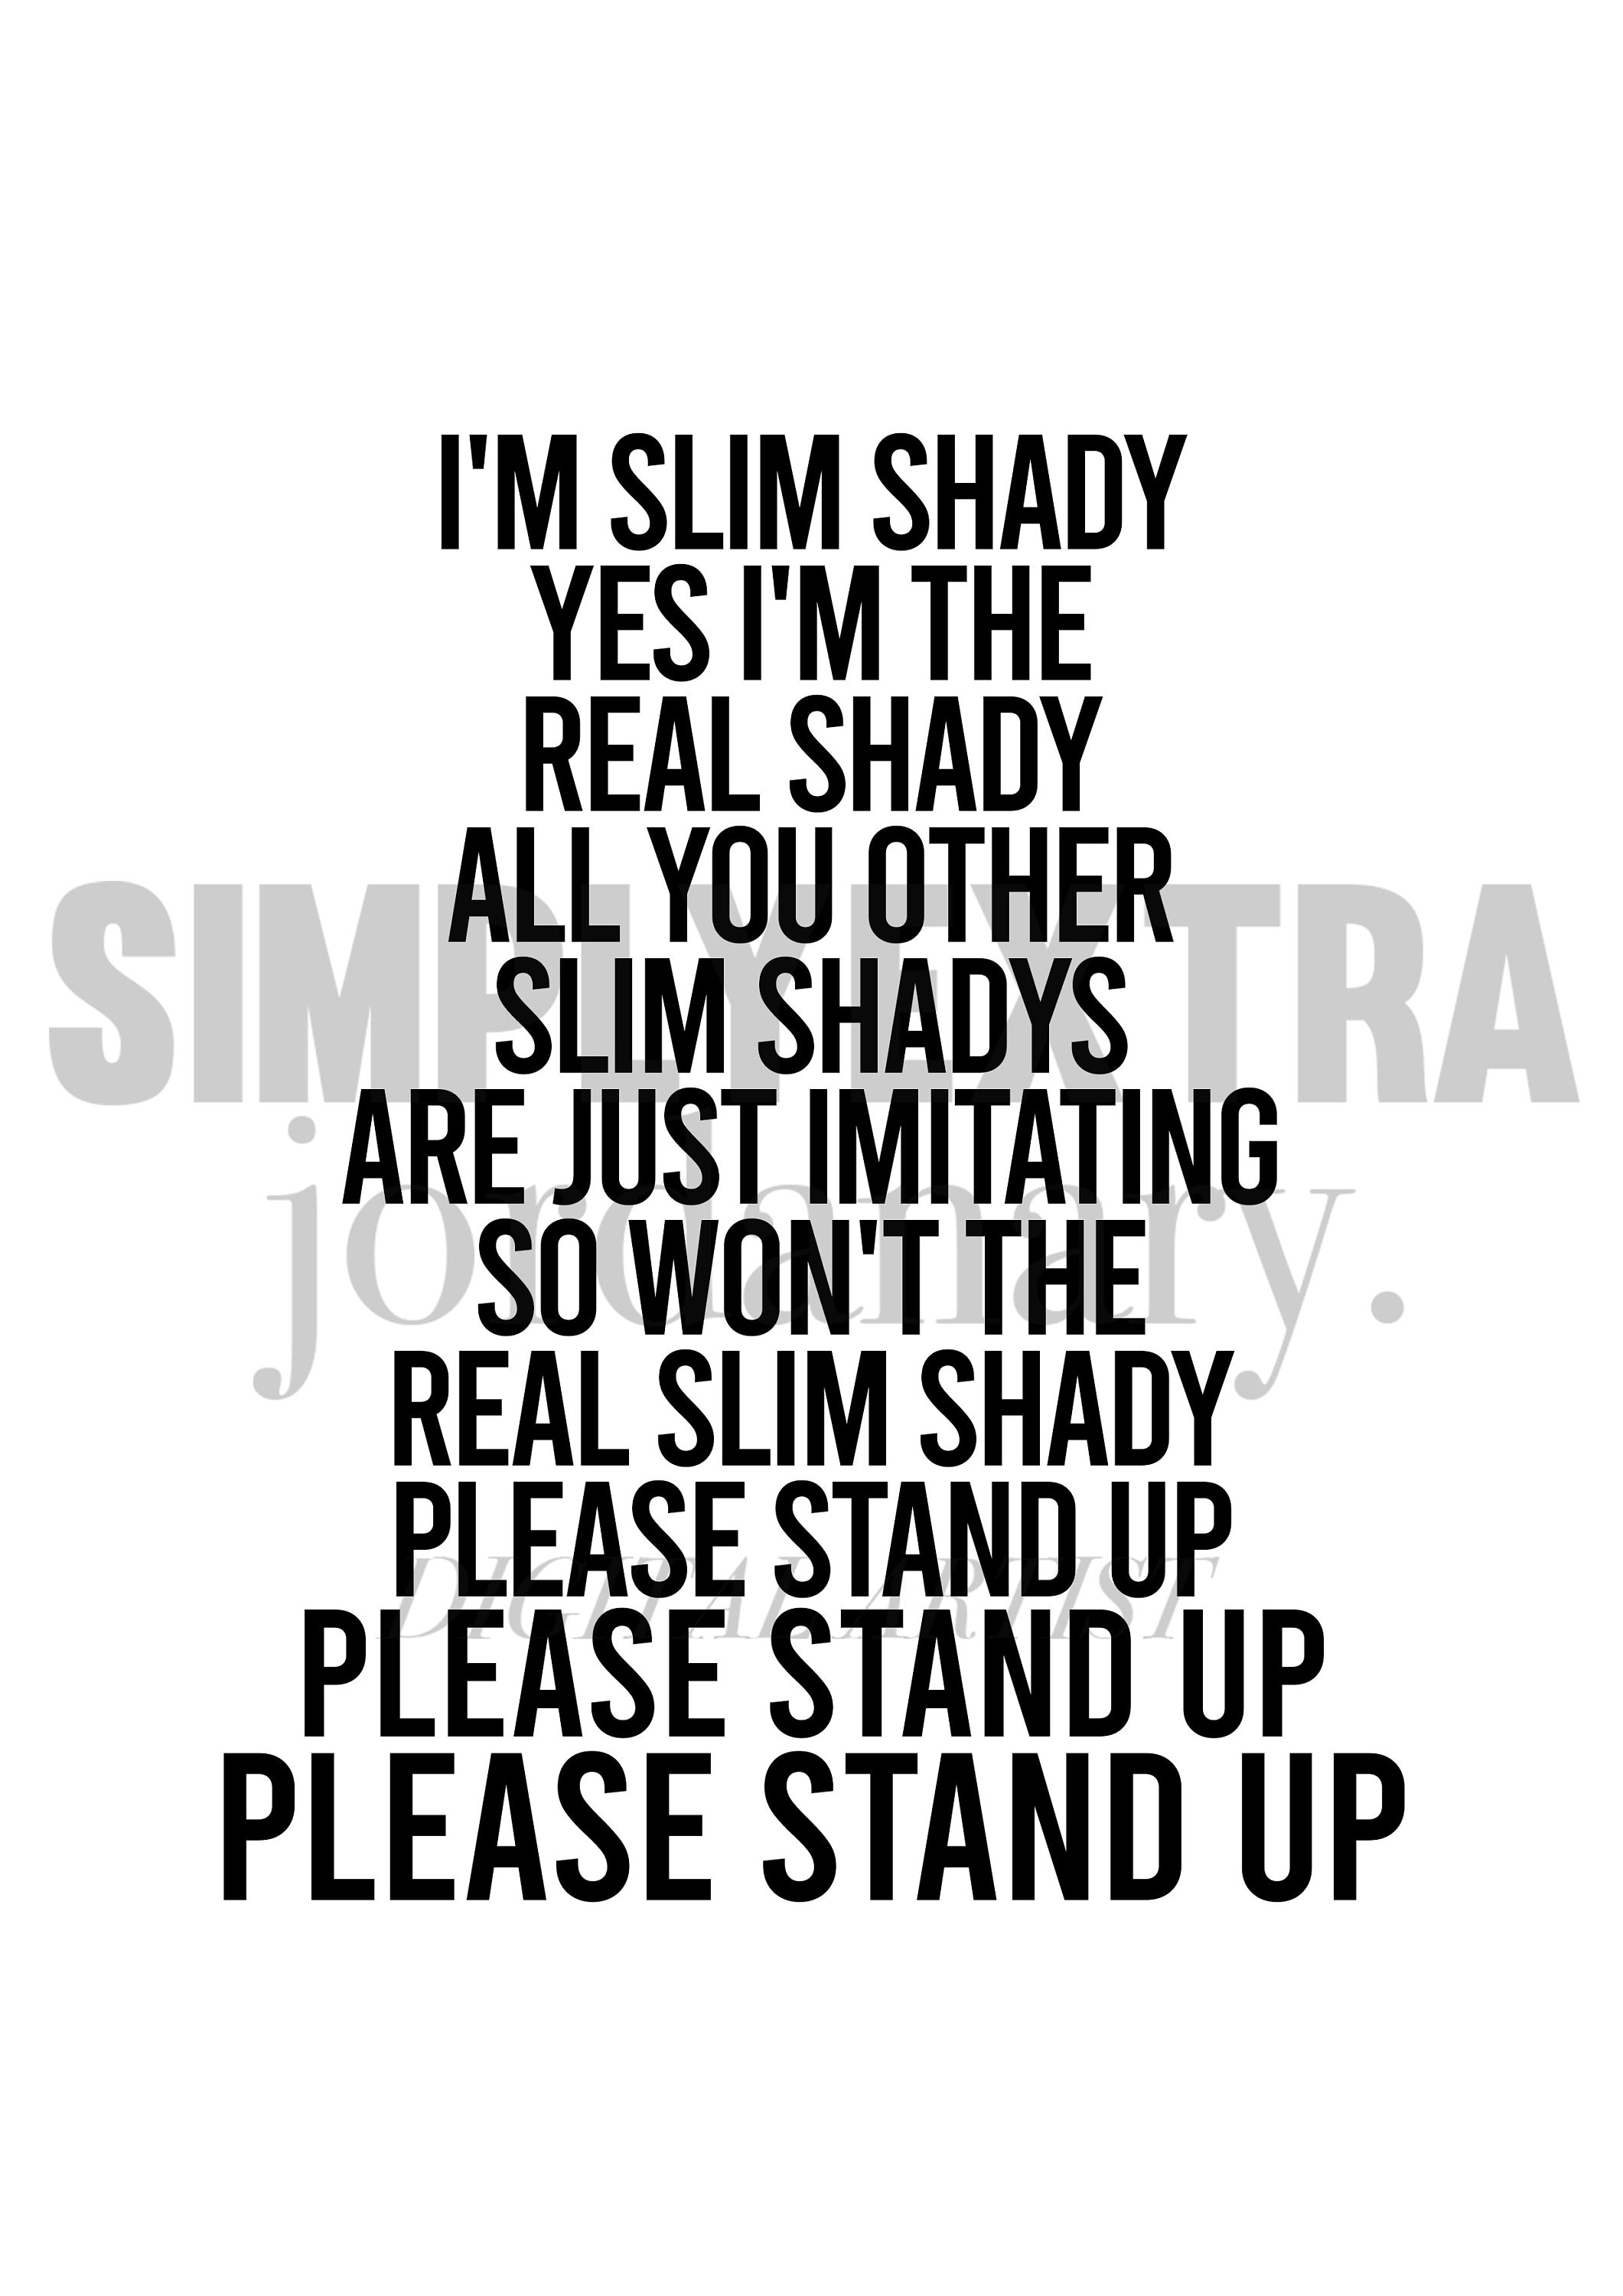  Eminem: The Real Slim Shady (Hip Hop in America